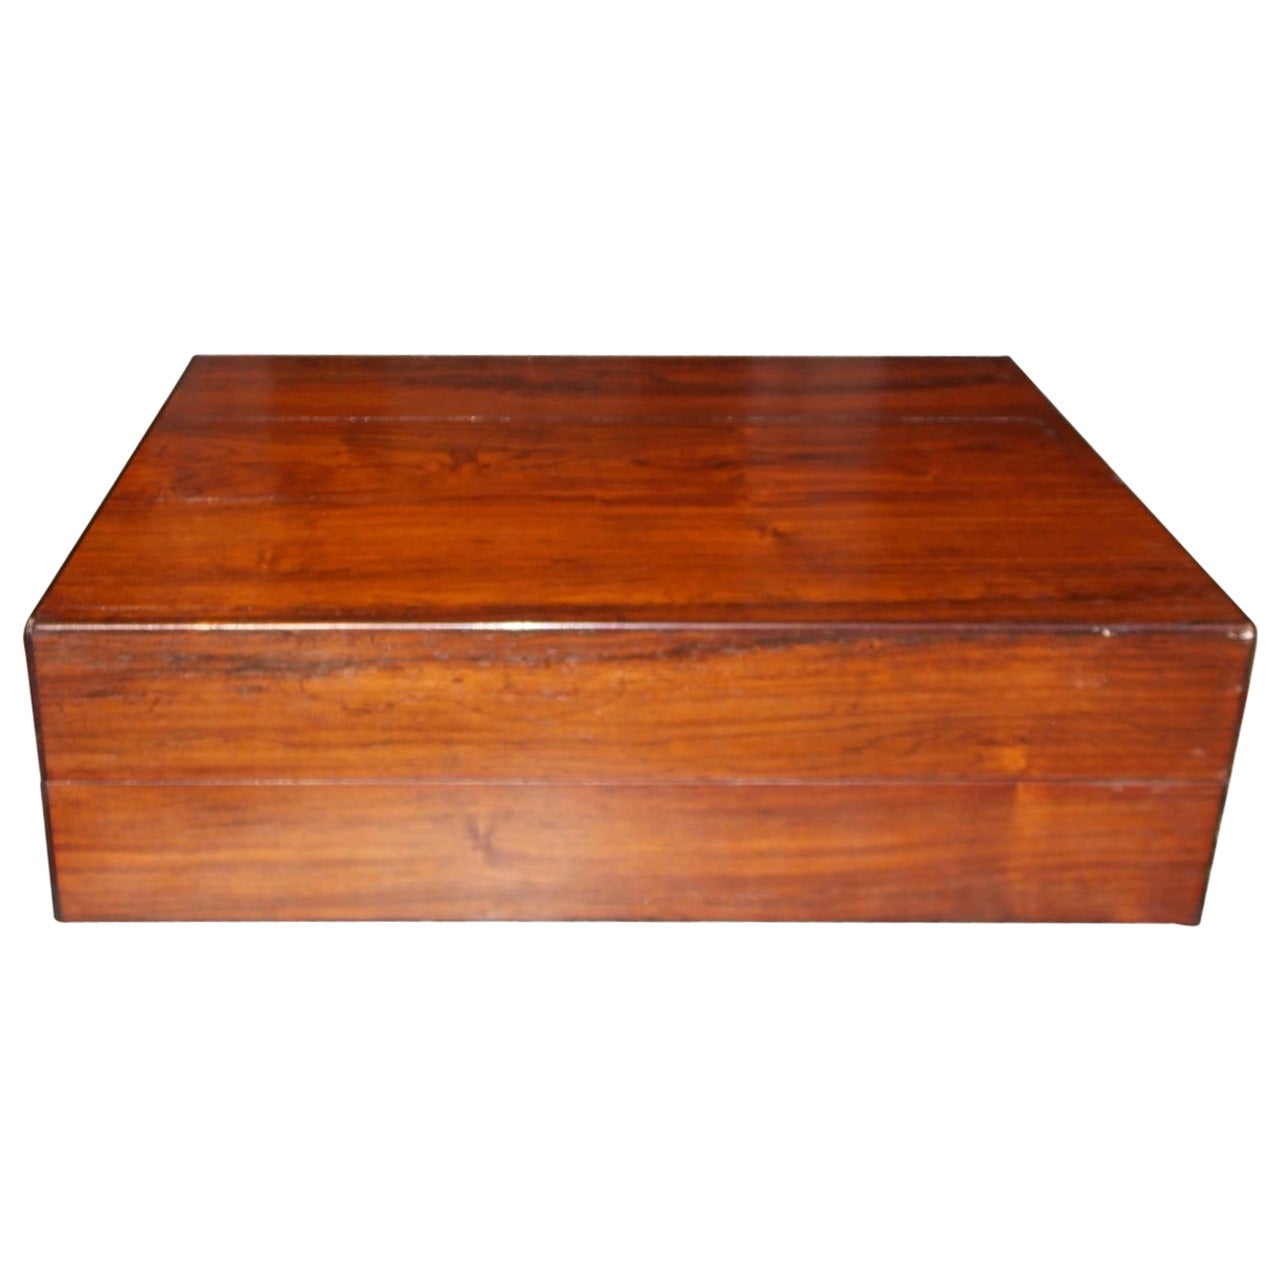 Complete English Zebra Wood Backgammon Game Box, Circa 1830